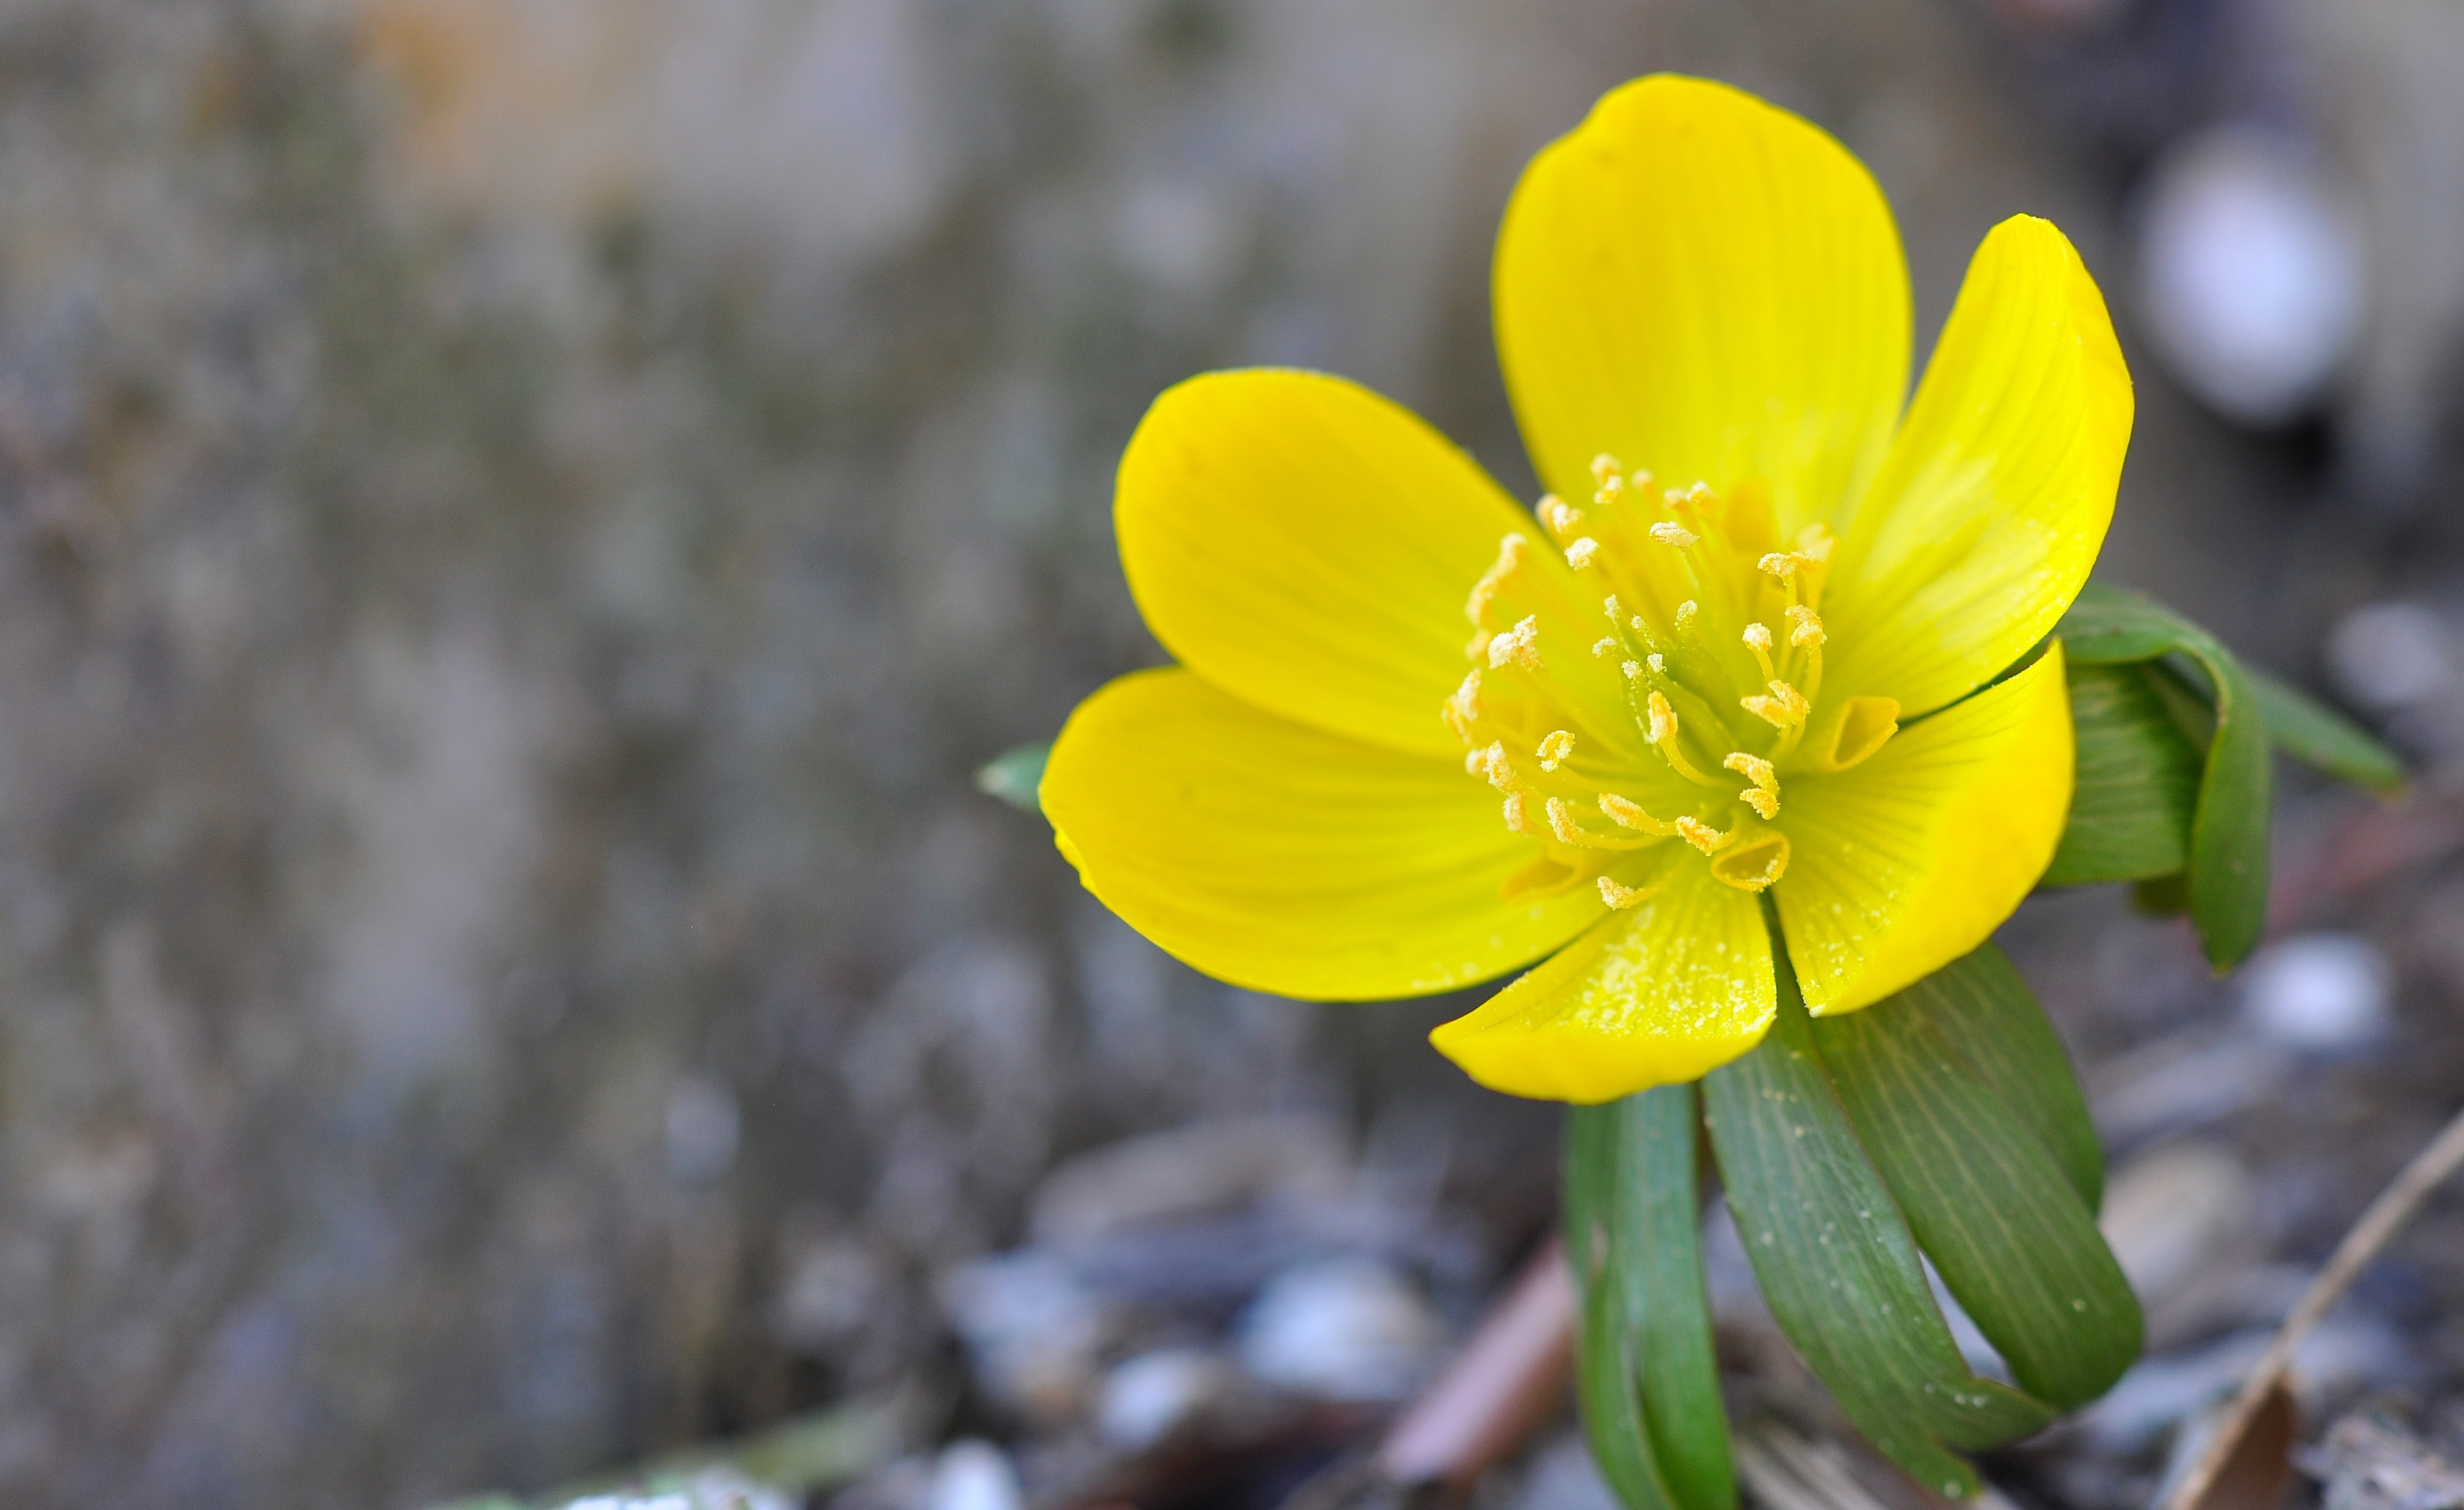 6 yellow petaled flower